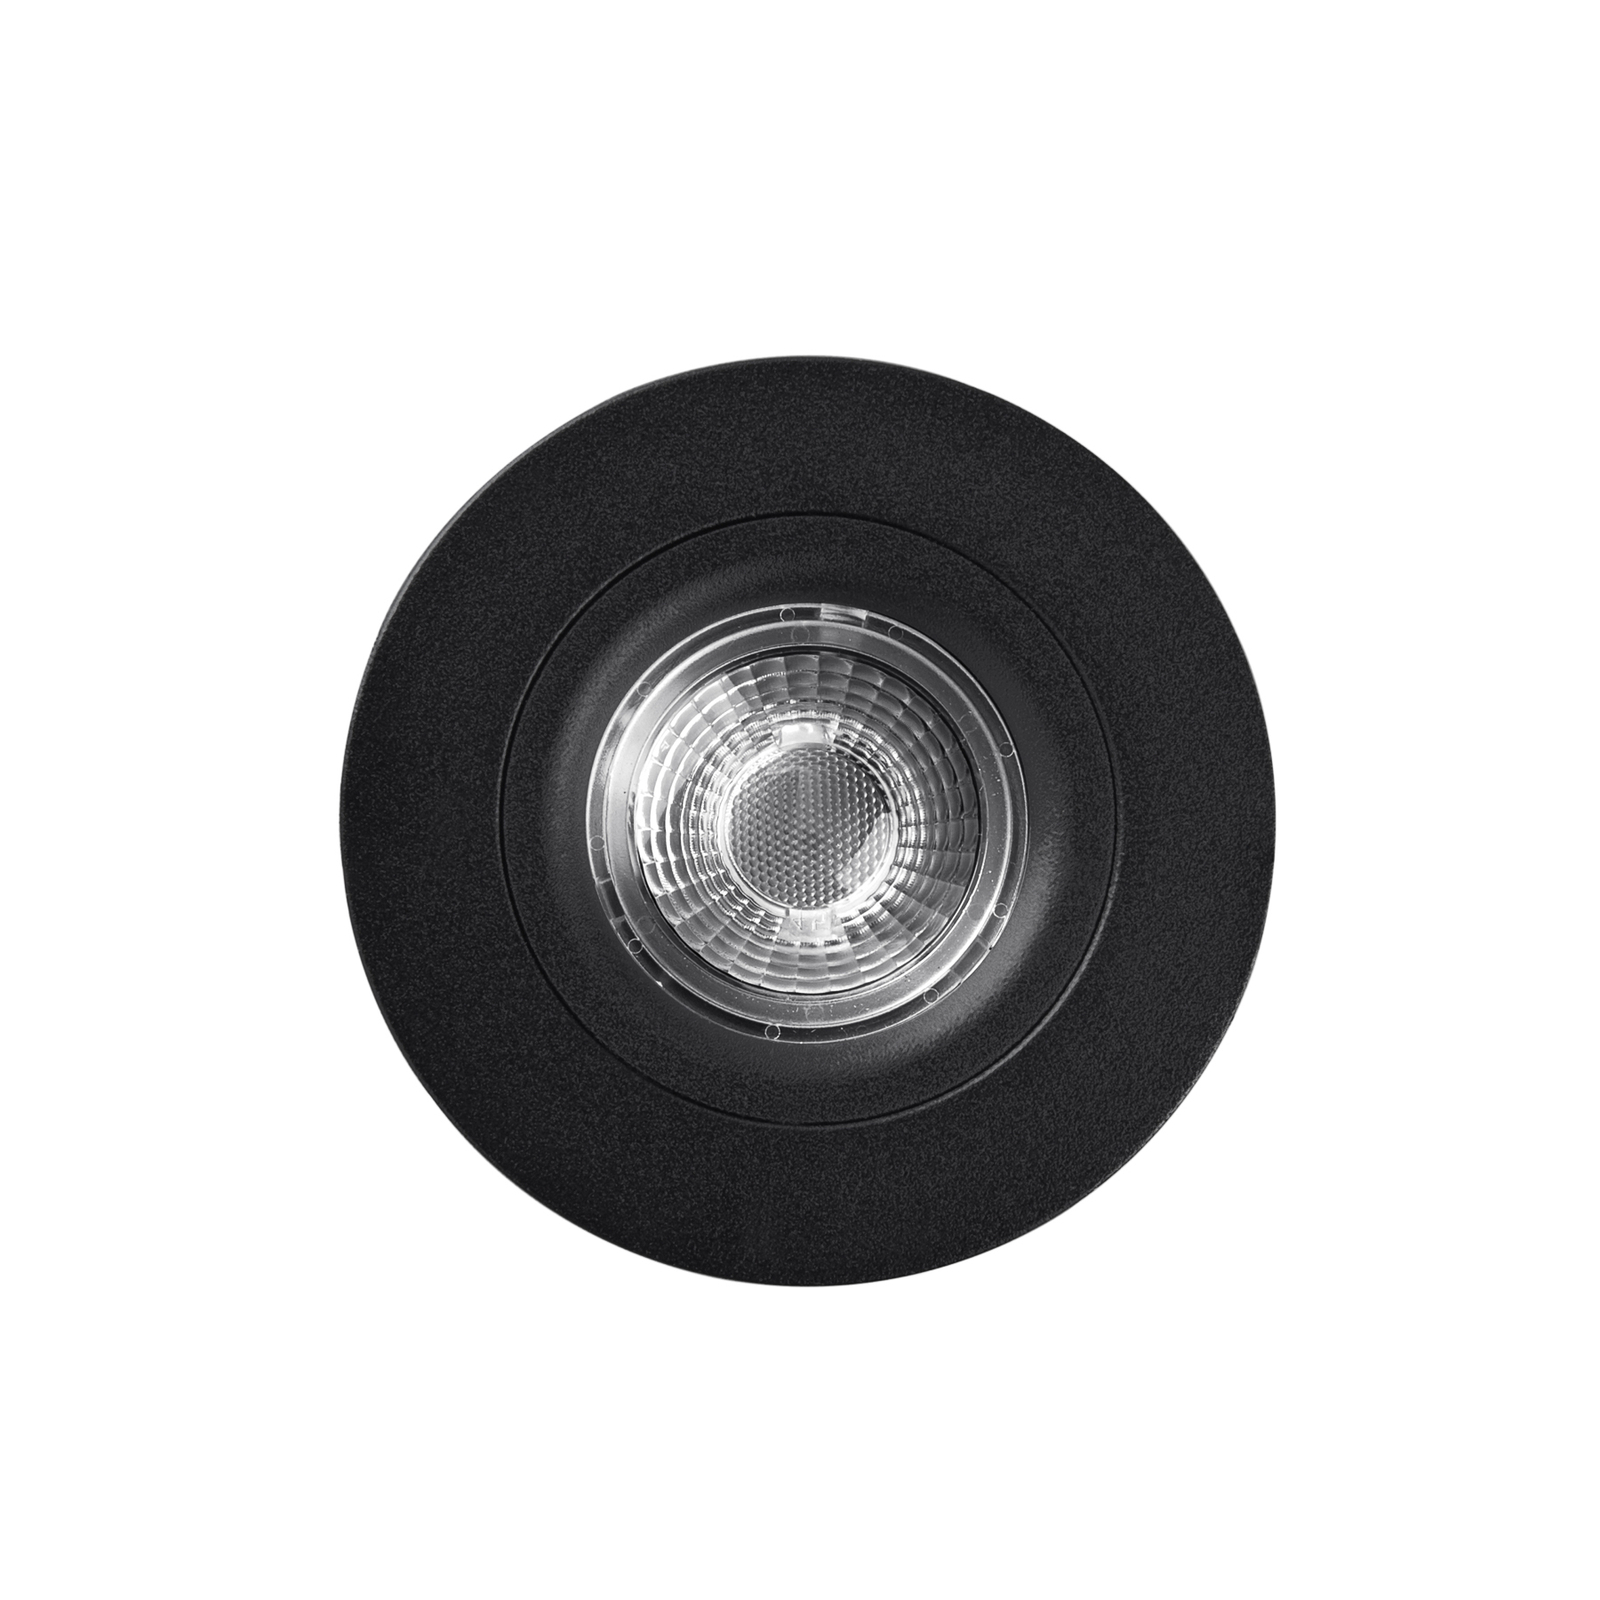 Foco empotrado LED DL6809, redondo, negro